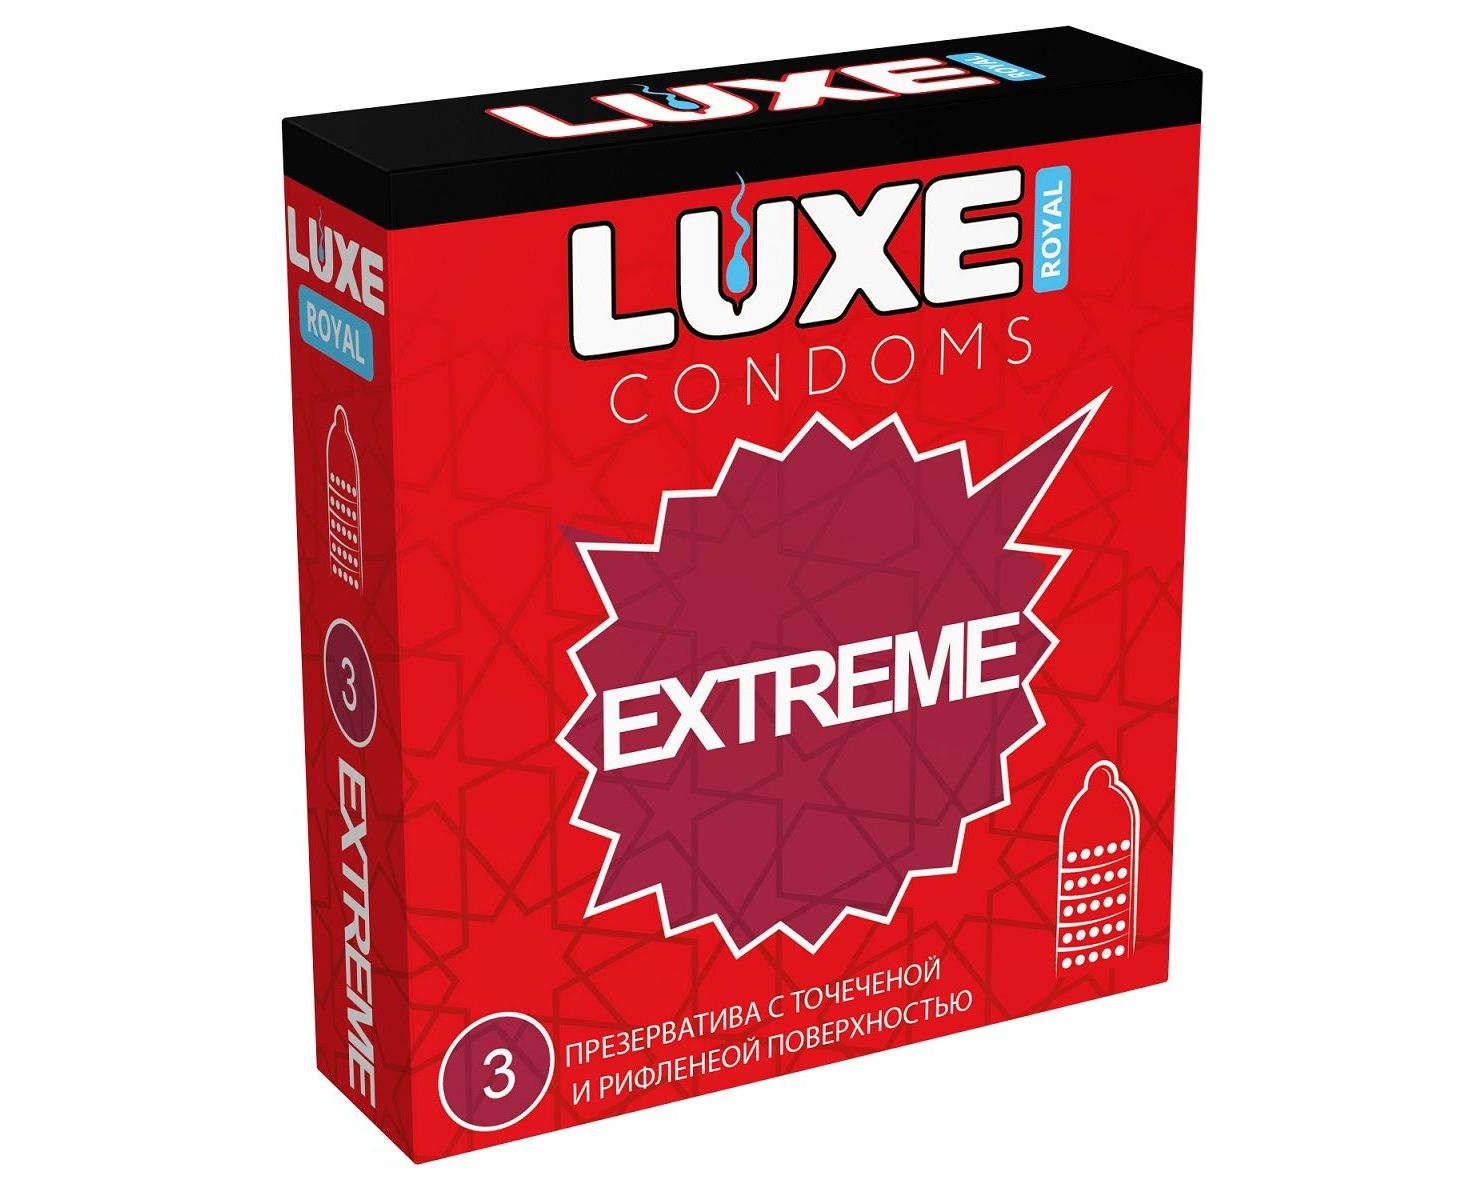 текстурированные презервативы luxe royal extreme